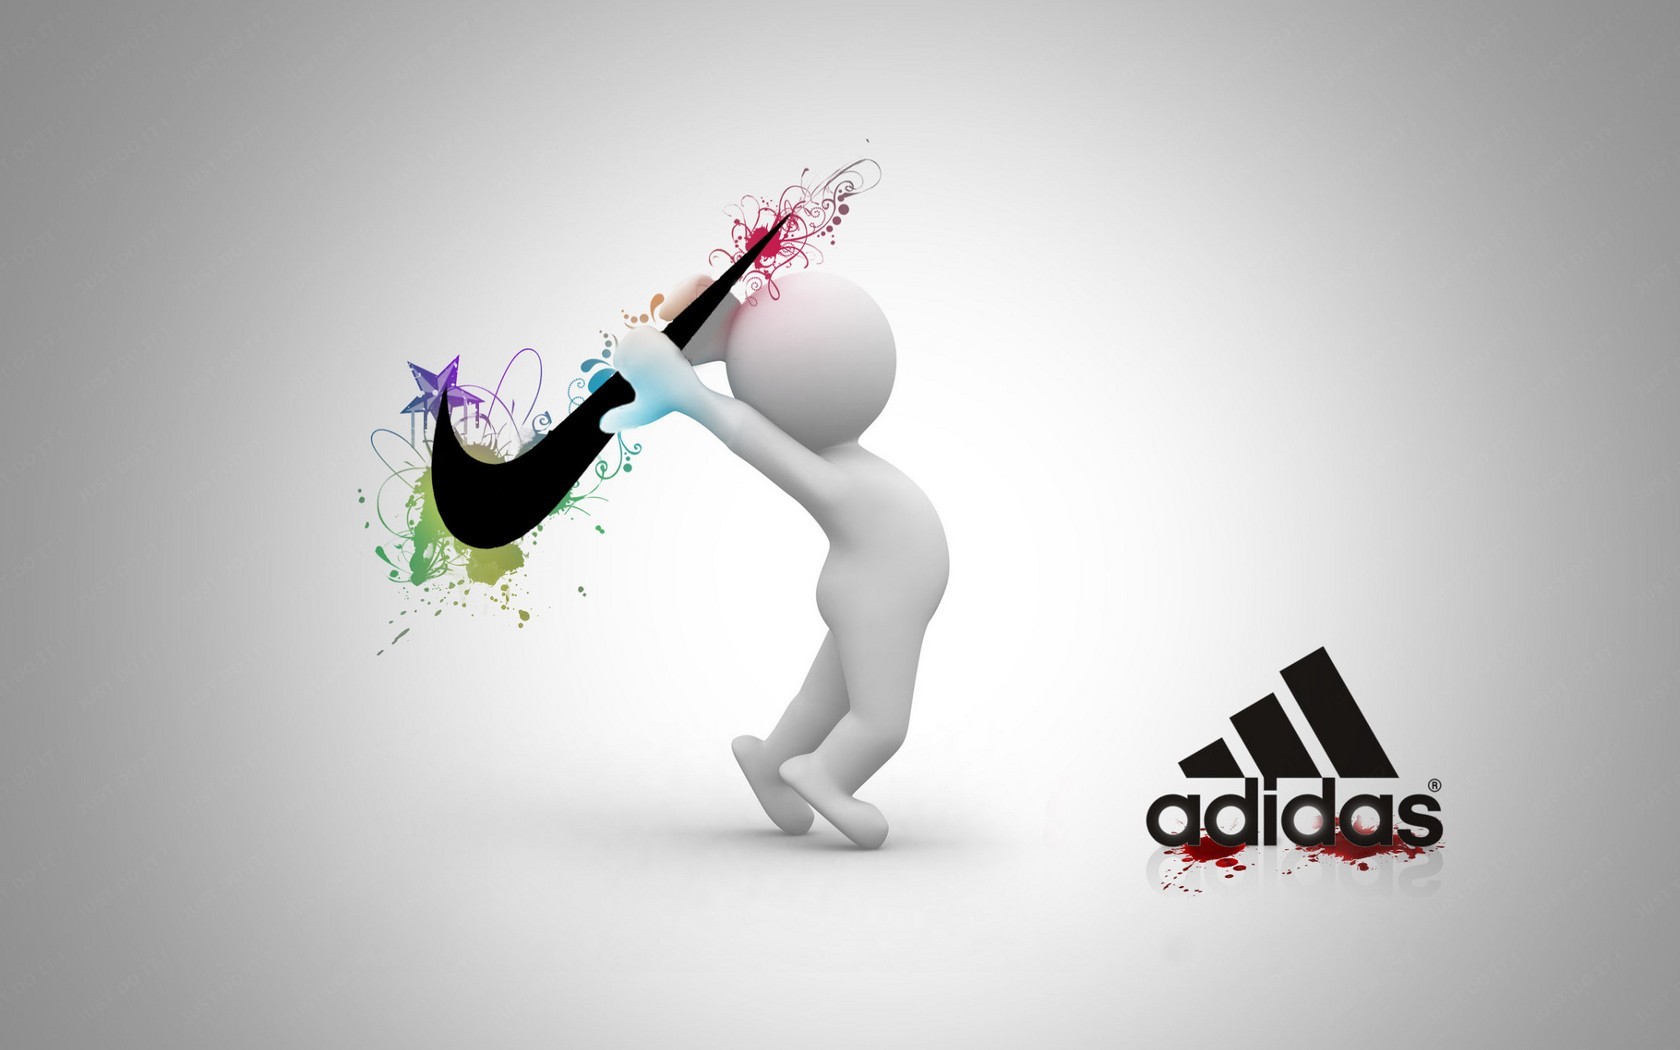 General 1680x1050 Adidas white logo digital art simple background humor Nike blood gradient brand